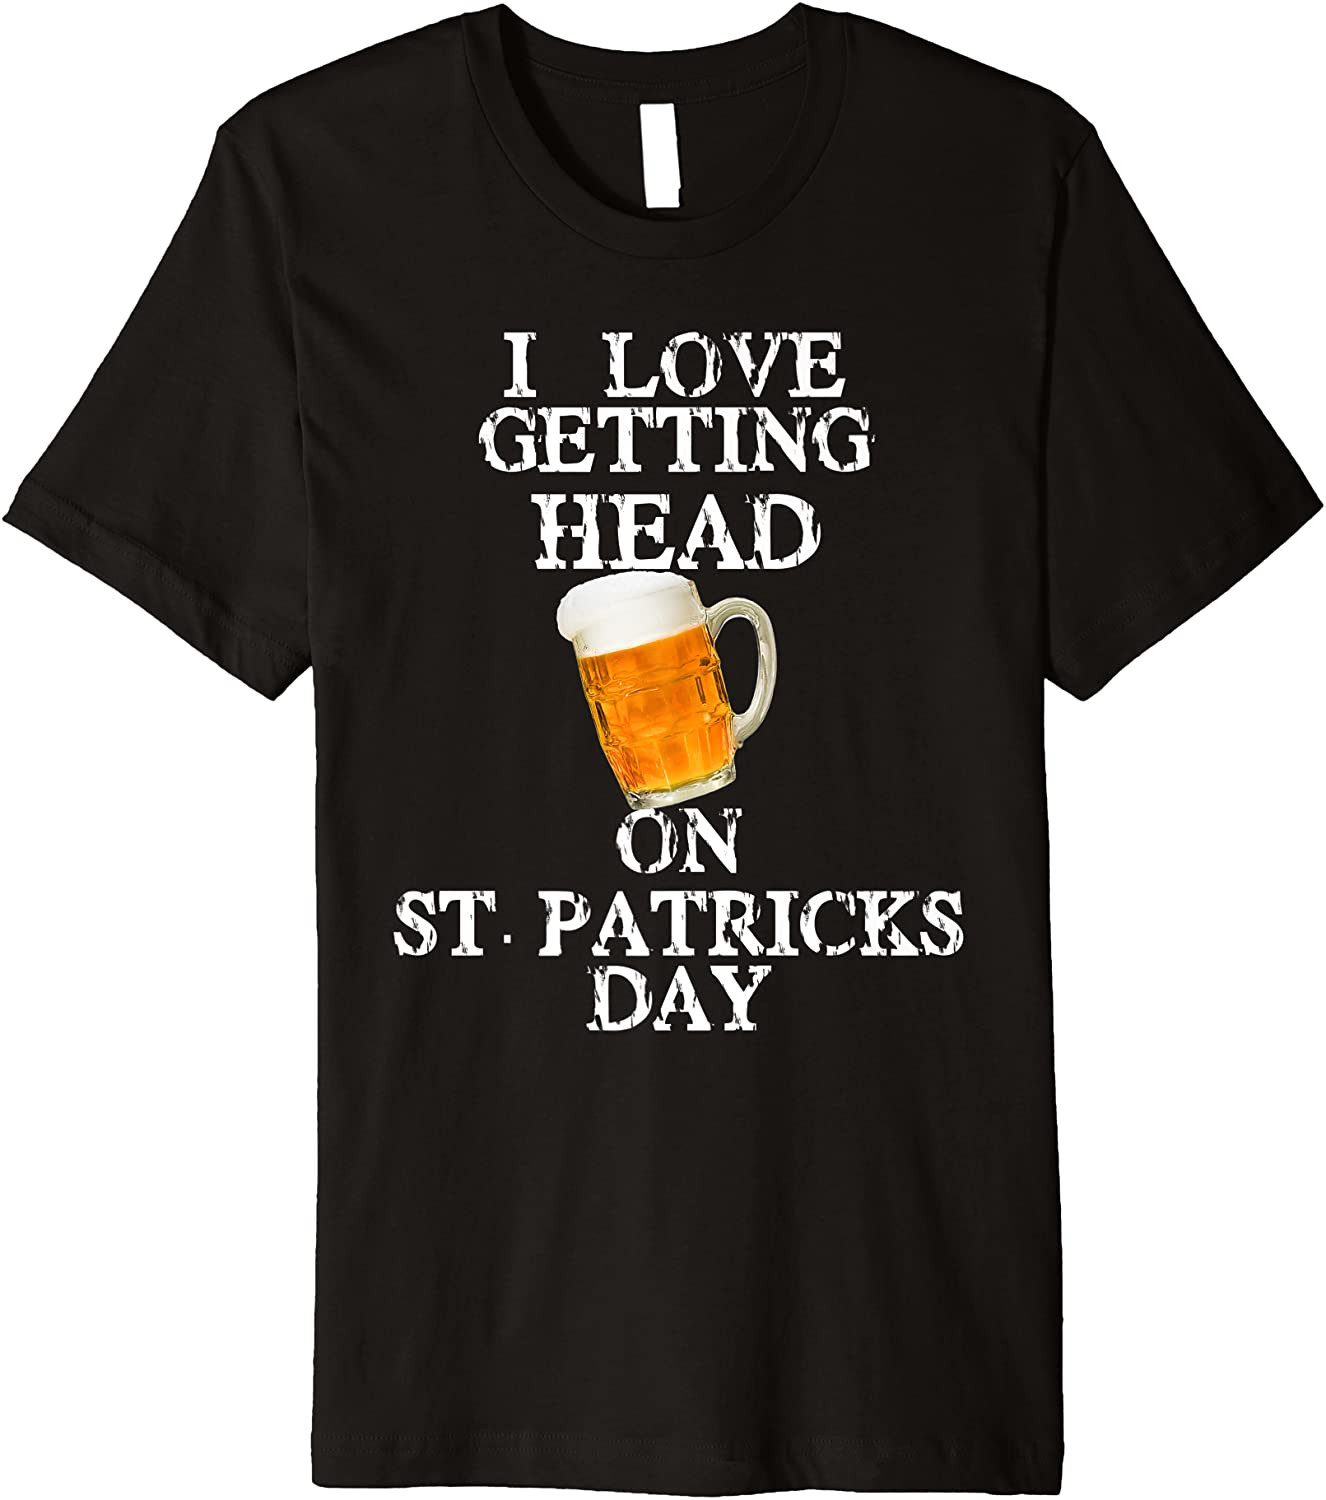 I Love Getting Head On St. Patricks Day T-Shirt